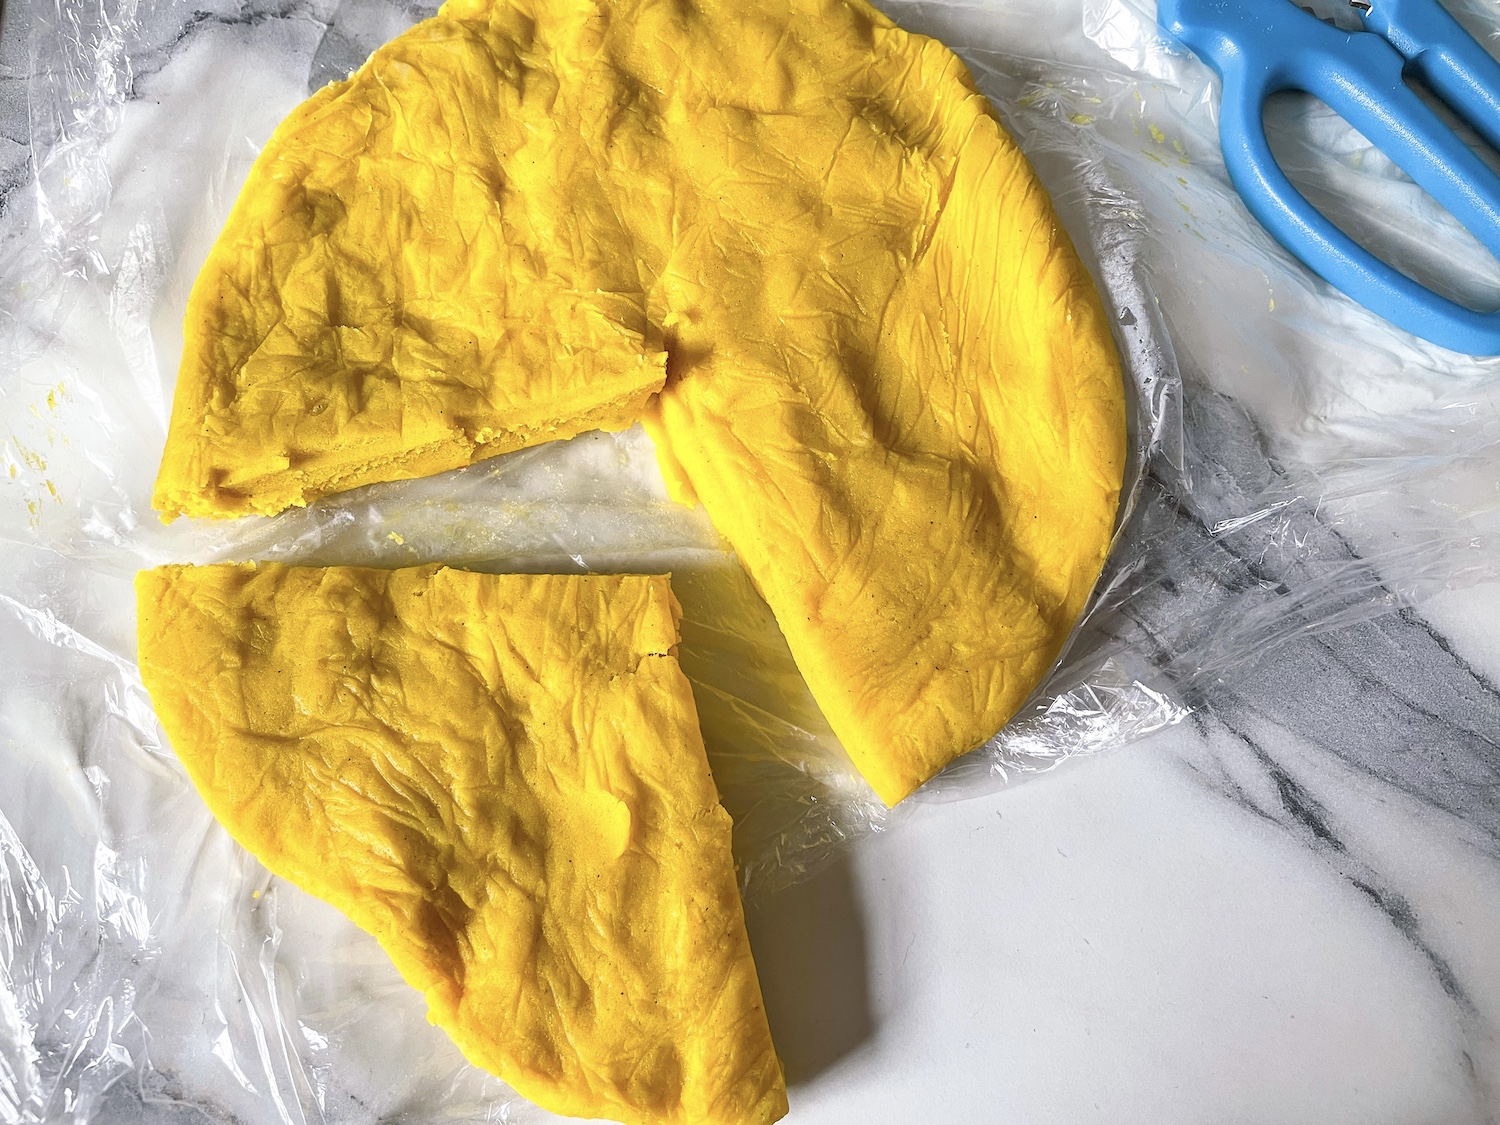 Remove 1/4 yellow dough